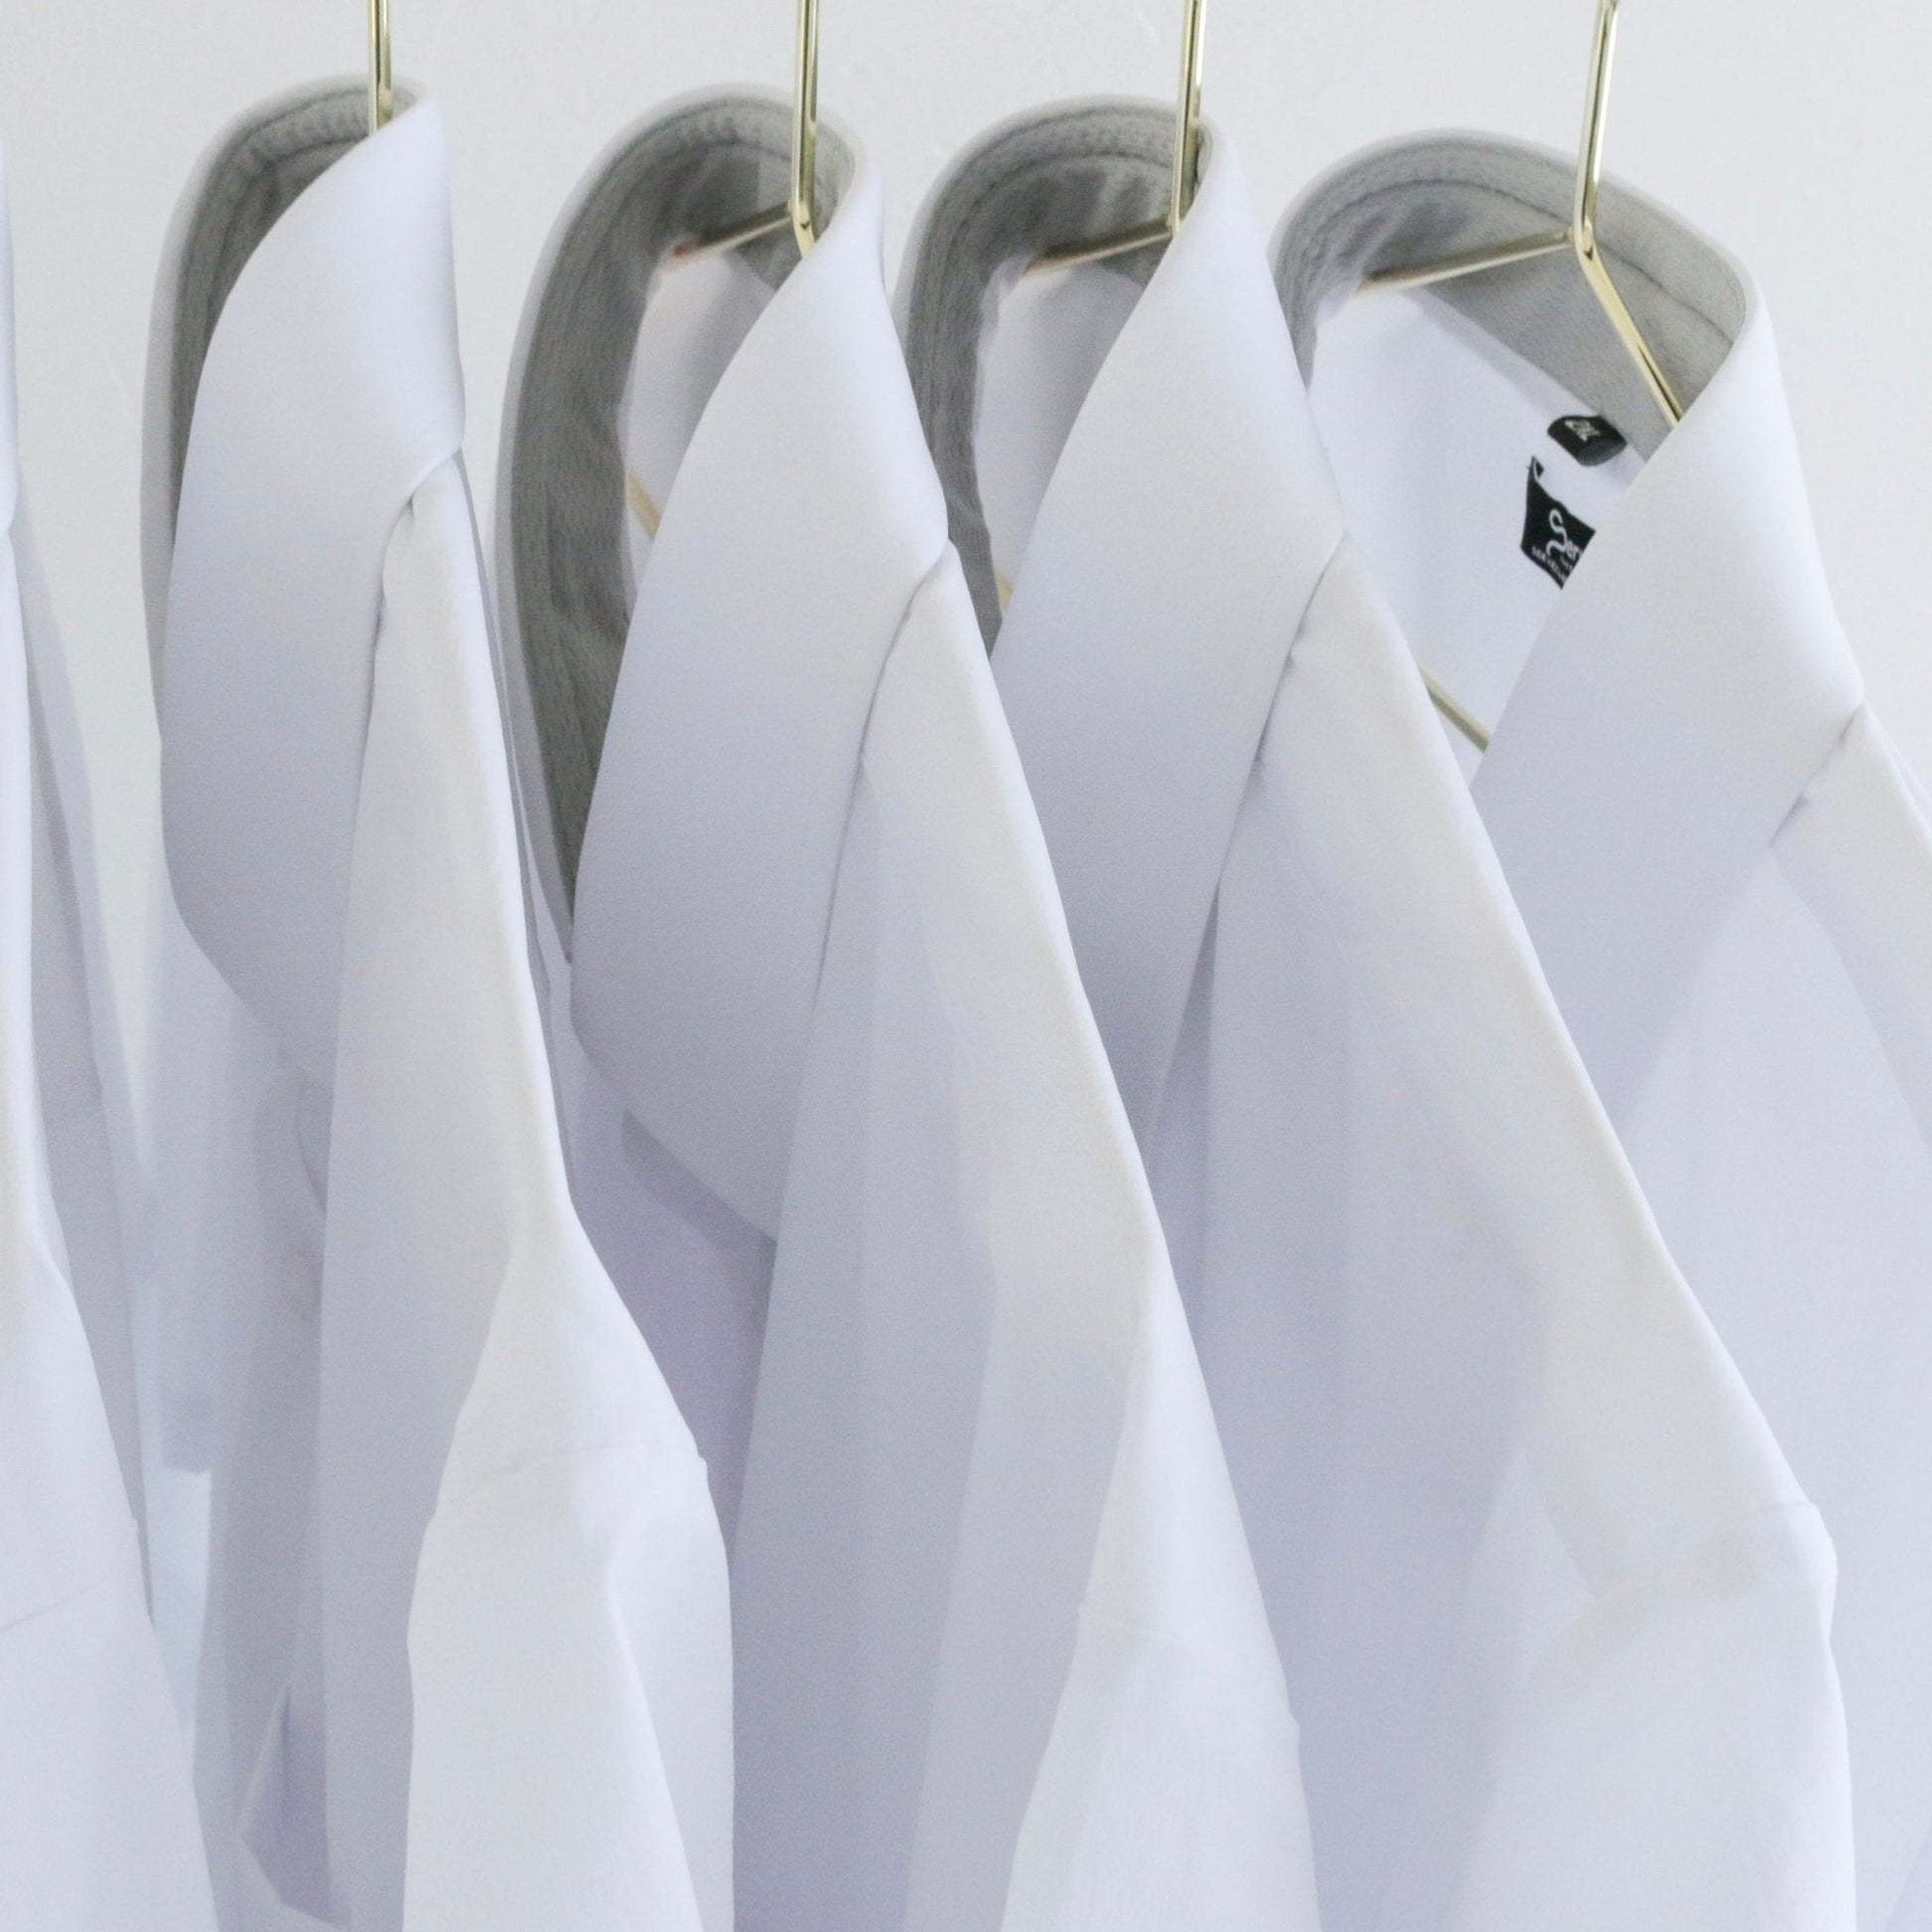 Breathable White Long Sleeve Dress Shirt - Serve Clothing